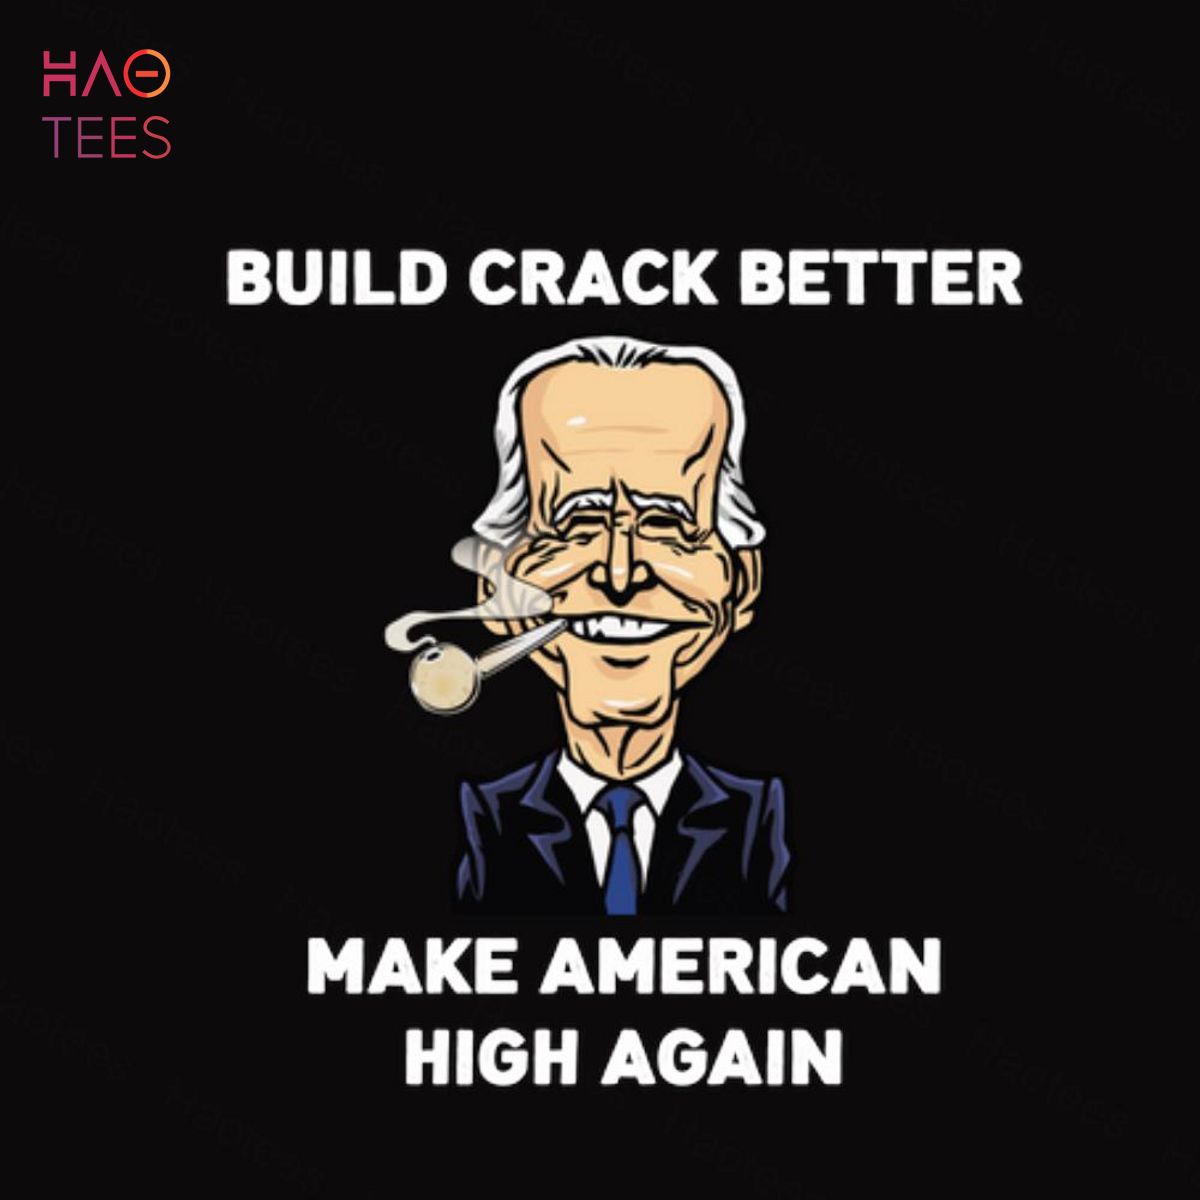 Build Crack Better Make America High Again Shirt